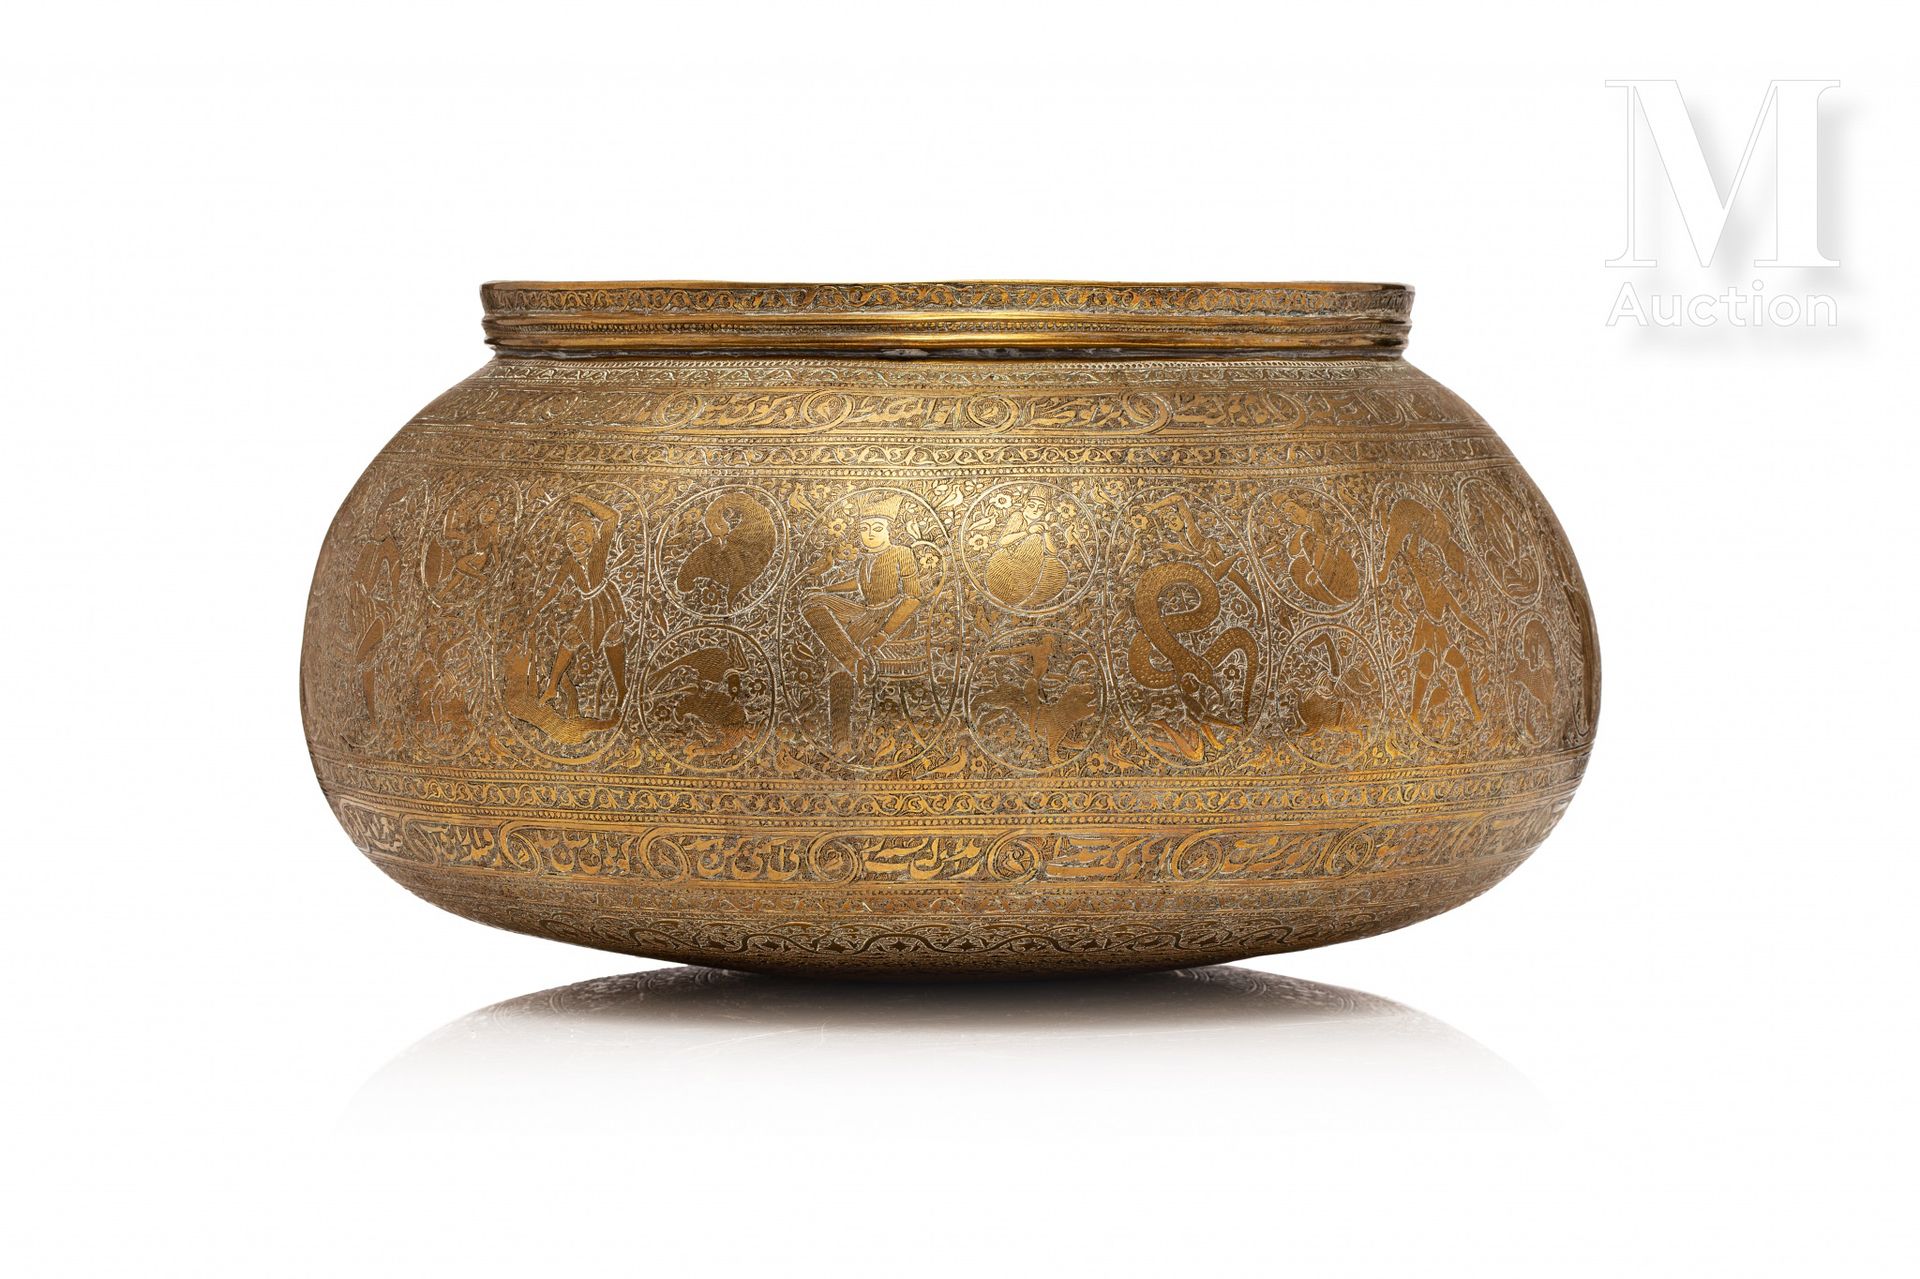 Tâs - Bassin qajar 伊朗，约1860-1880年

一件非常精细的铜器，饰有多个纹饰，覆盖整个侧面，以及盆顶和唇部。器身主要覆盖着圆形和椭圆形&hellip;